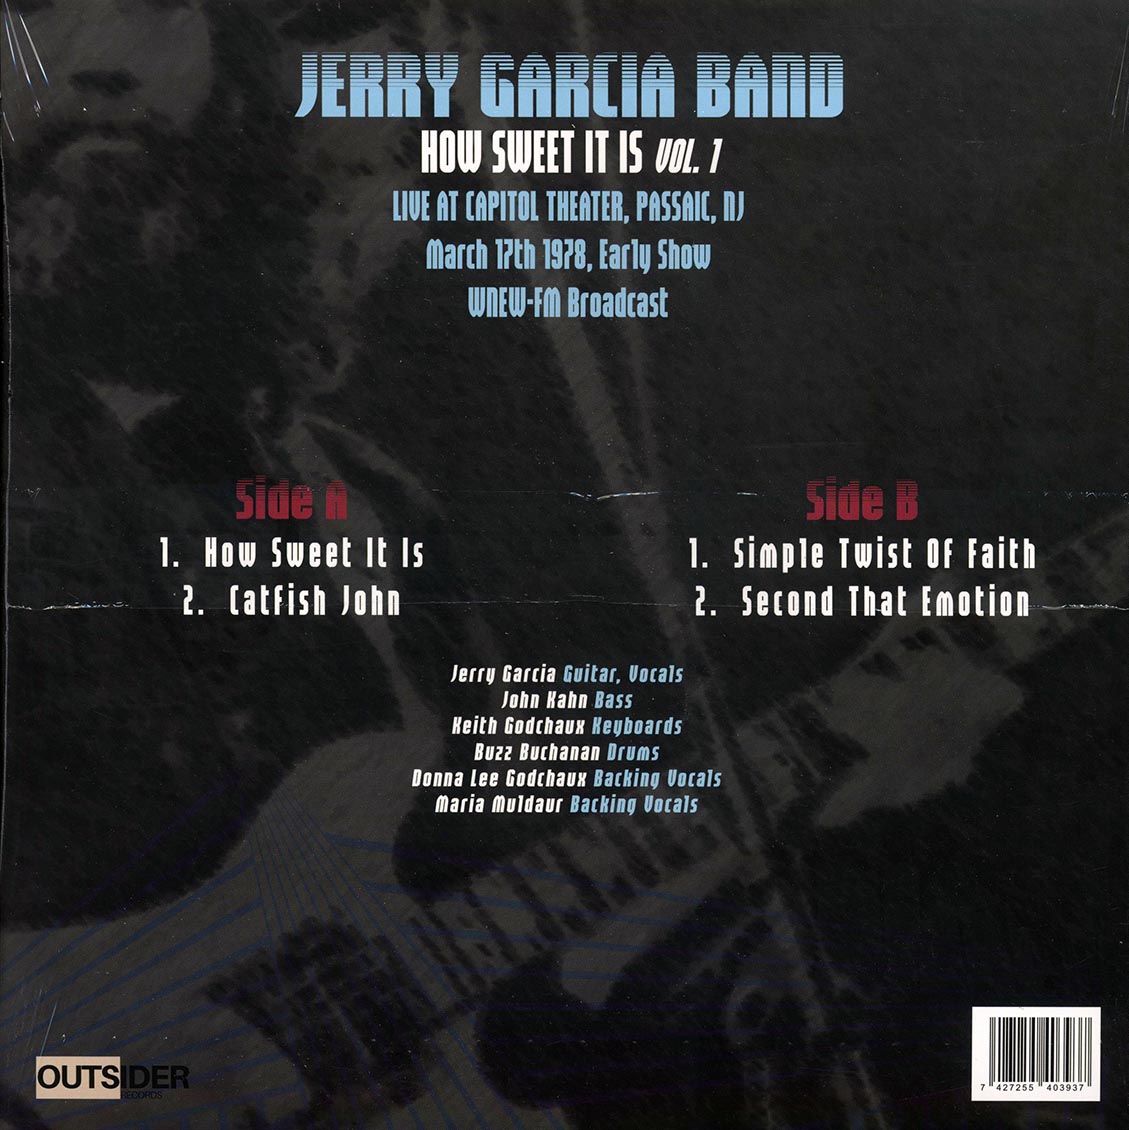 The Jerry Garcia Band - How Sweet It Is Volume 1: Live At Capitol Theater 1978 (ltd. ed.) (blue vinyl) - Vinyl LP, LP